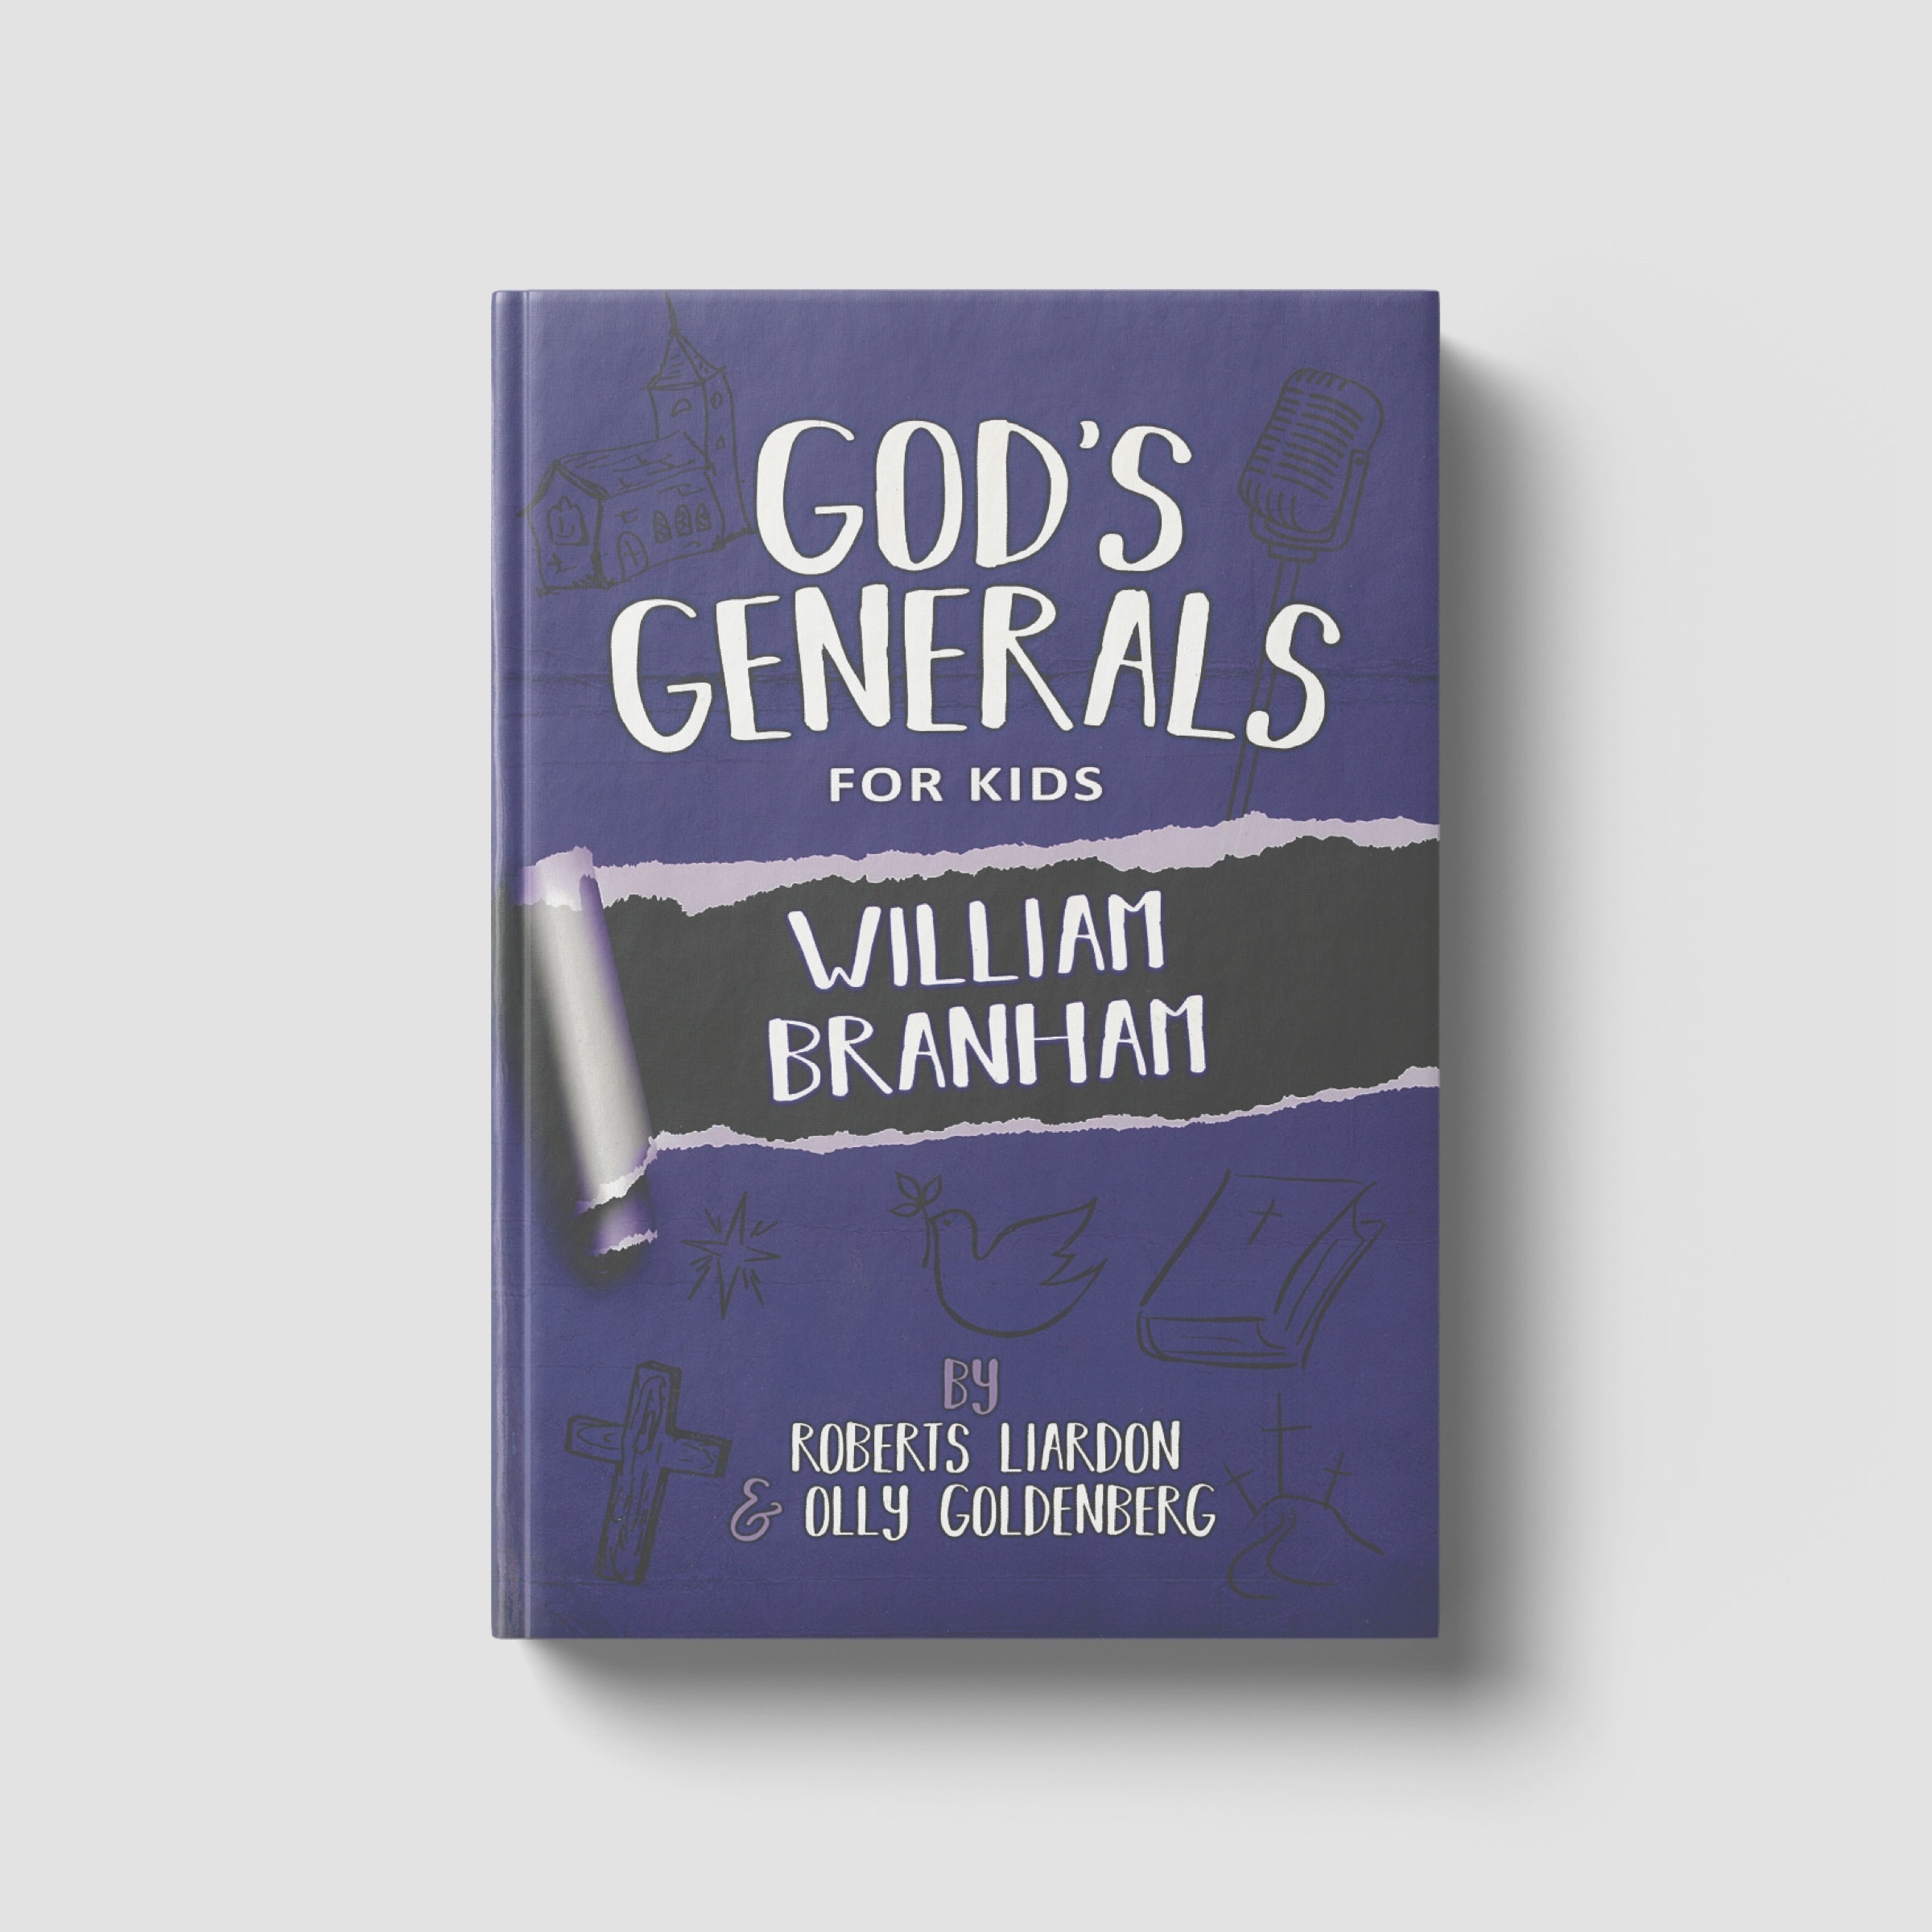 God's Generals for Kids William Branham Volume 10